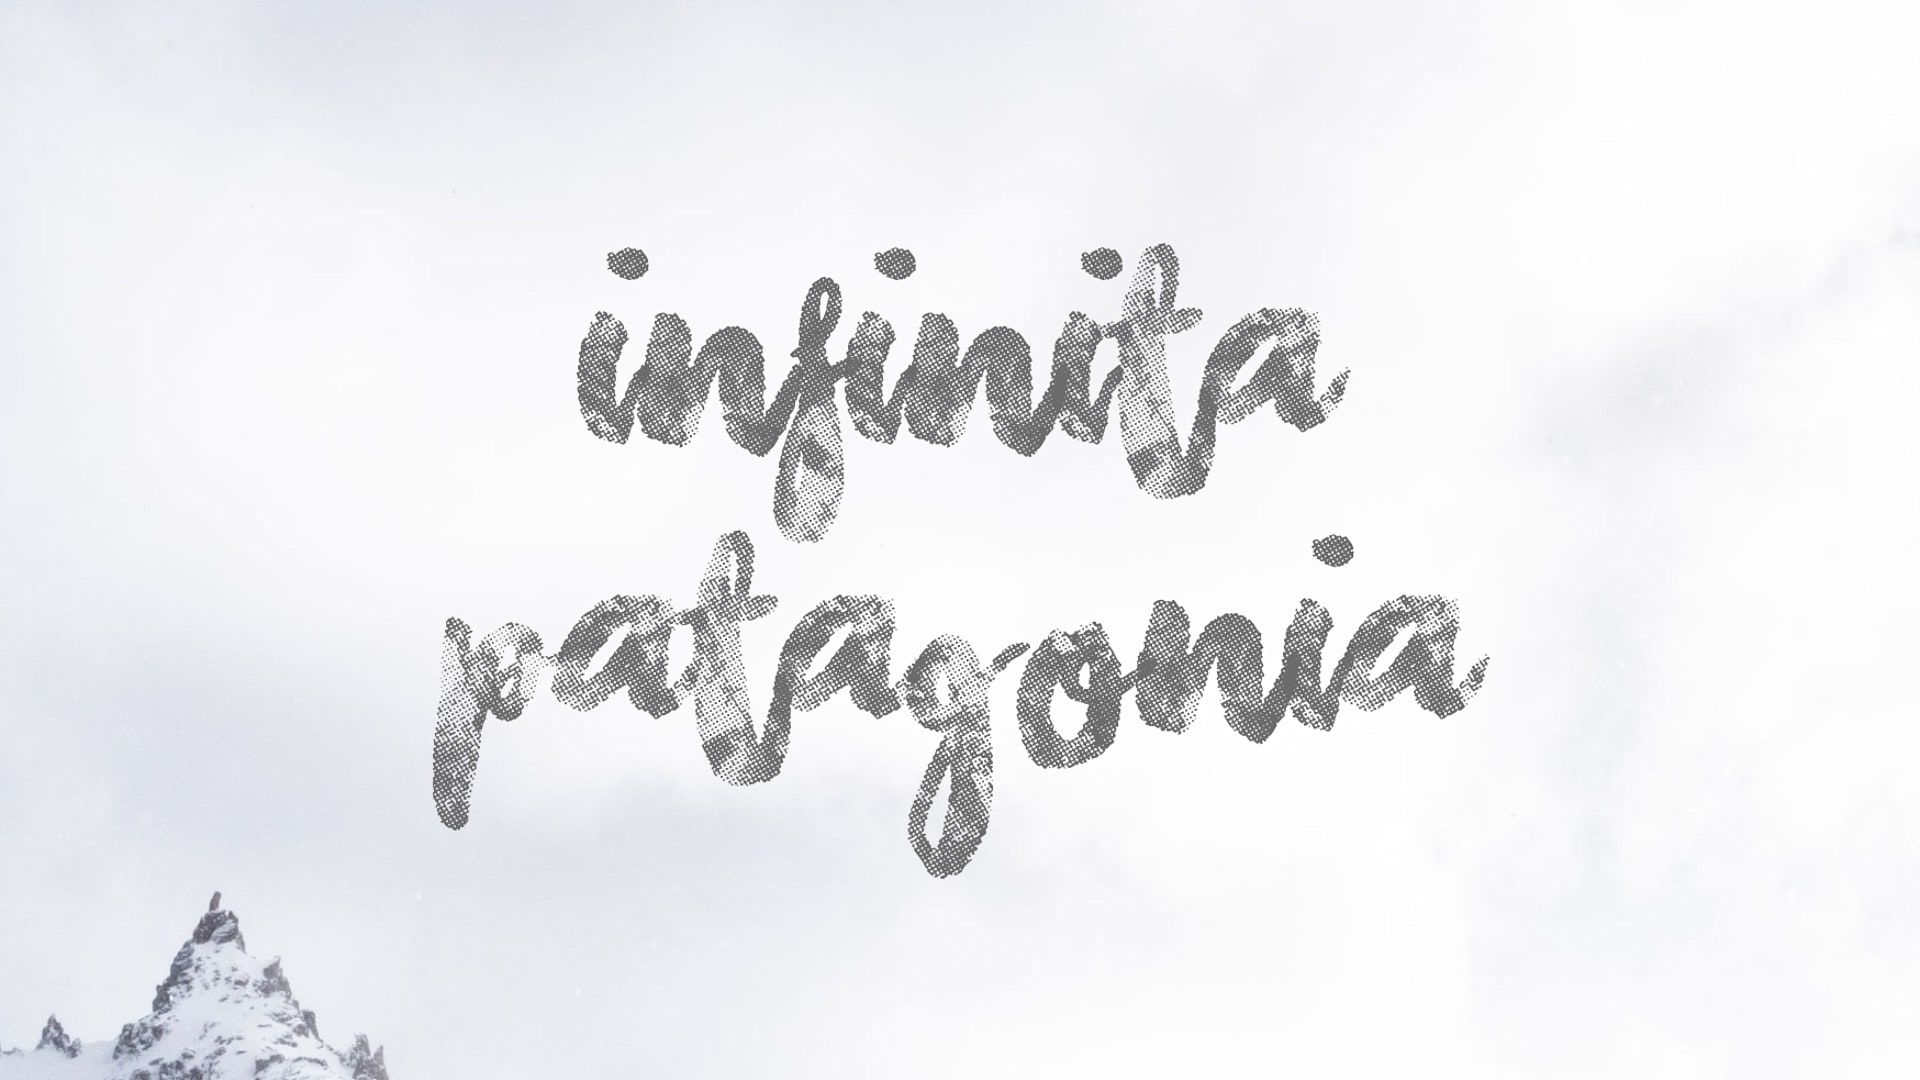 Infinita Patagonia